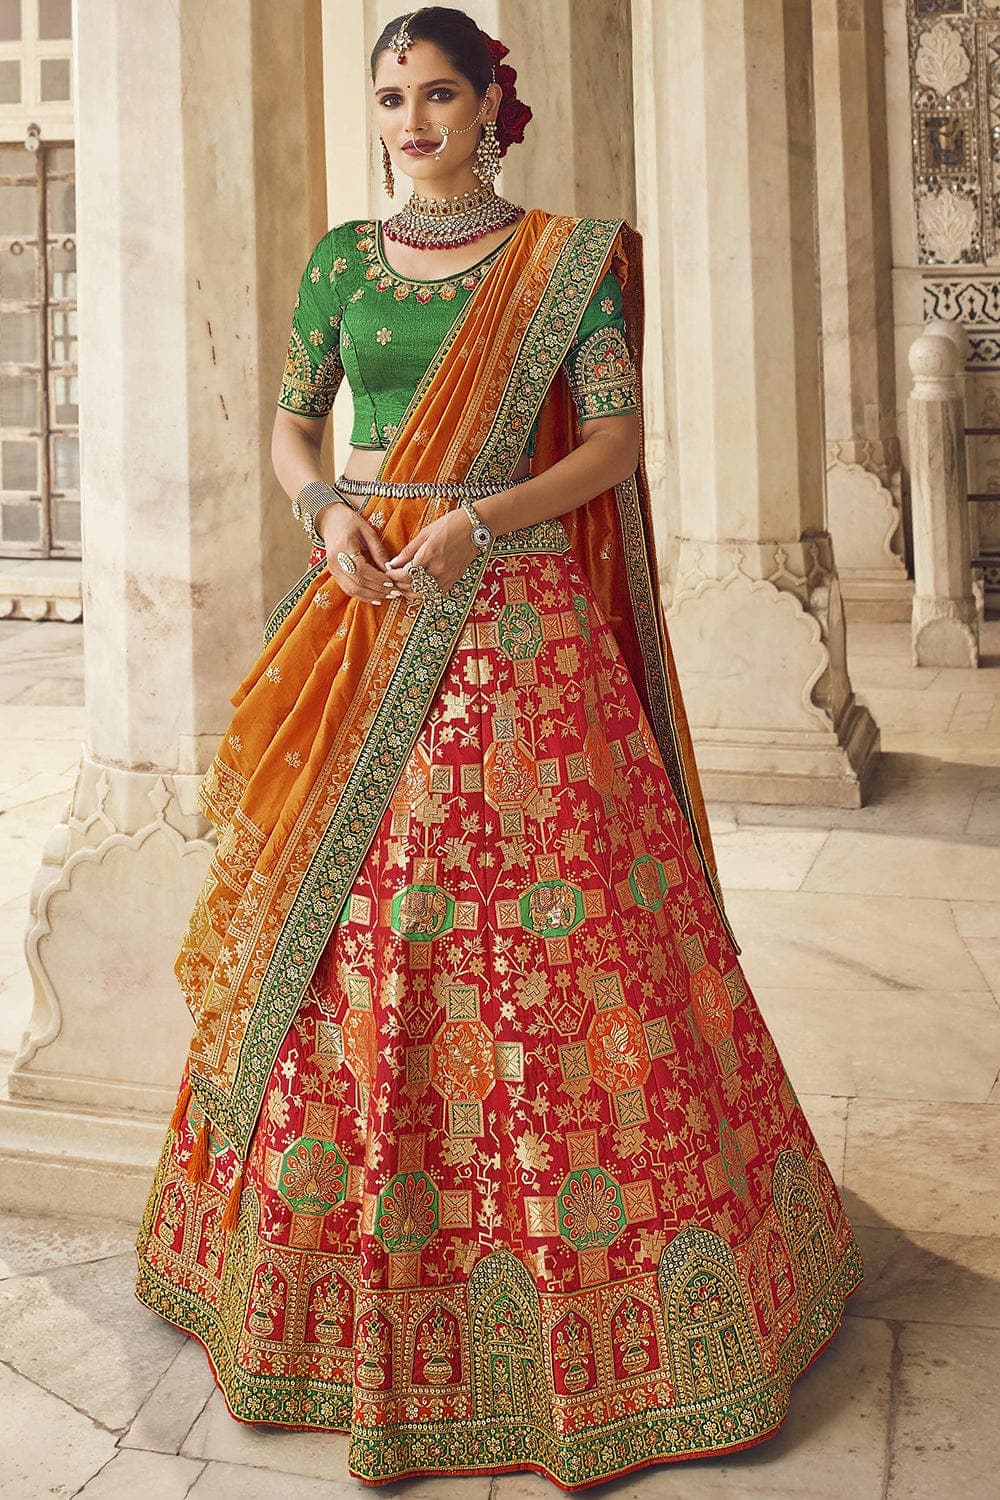 Bollywood South Actress Special Light Pink Silver and Golden Weaving Half Saree  Lehenga | Half saree designs, Half saree, Half saree lehenga